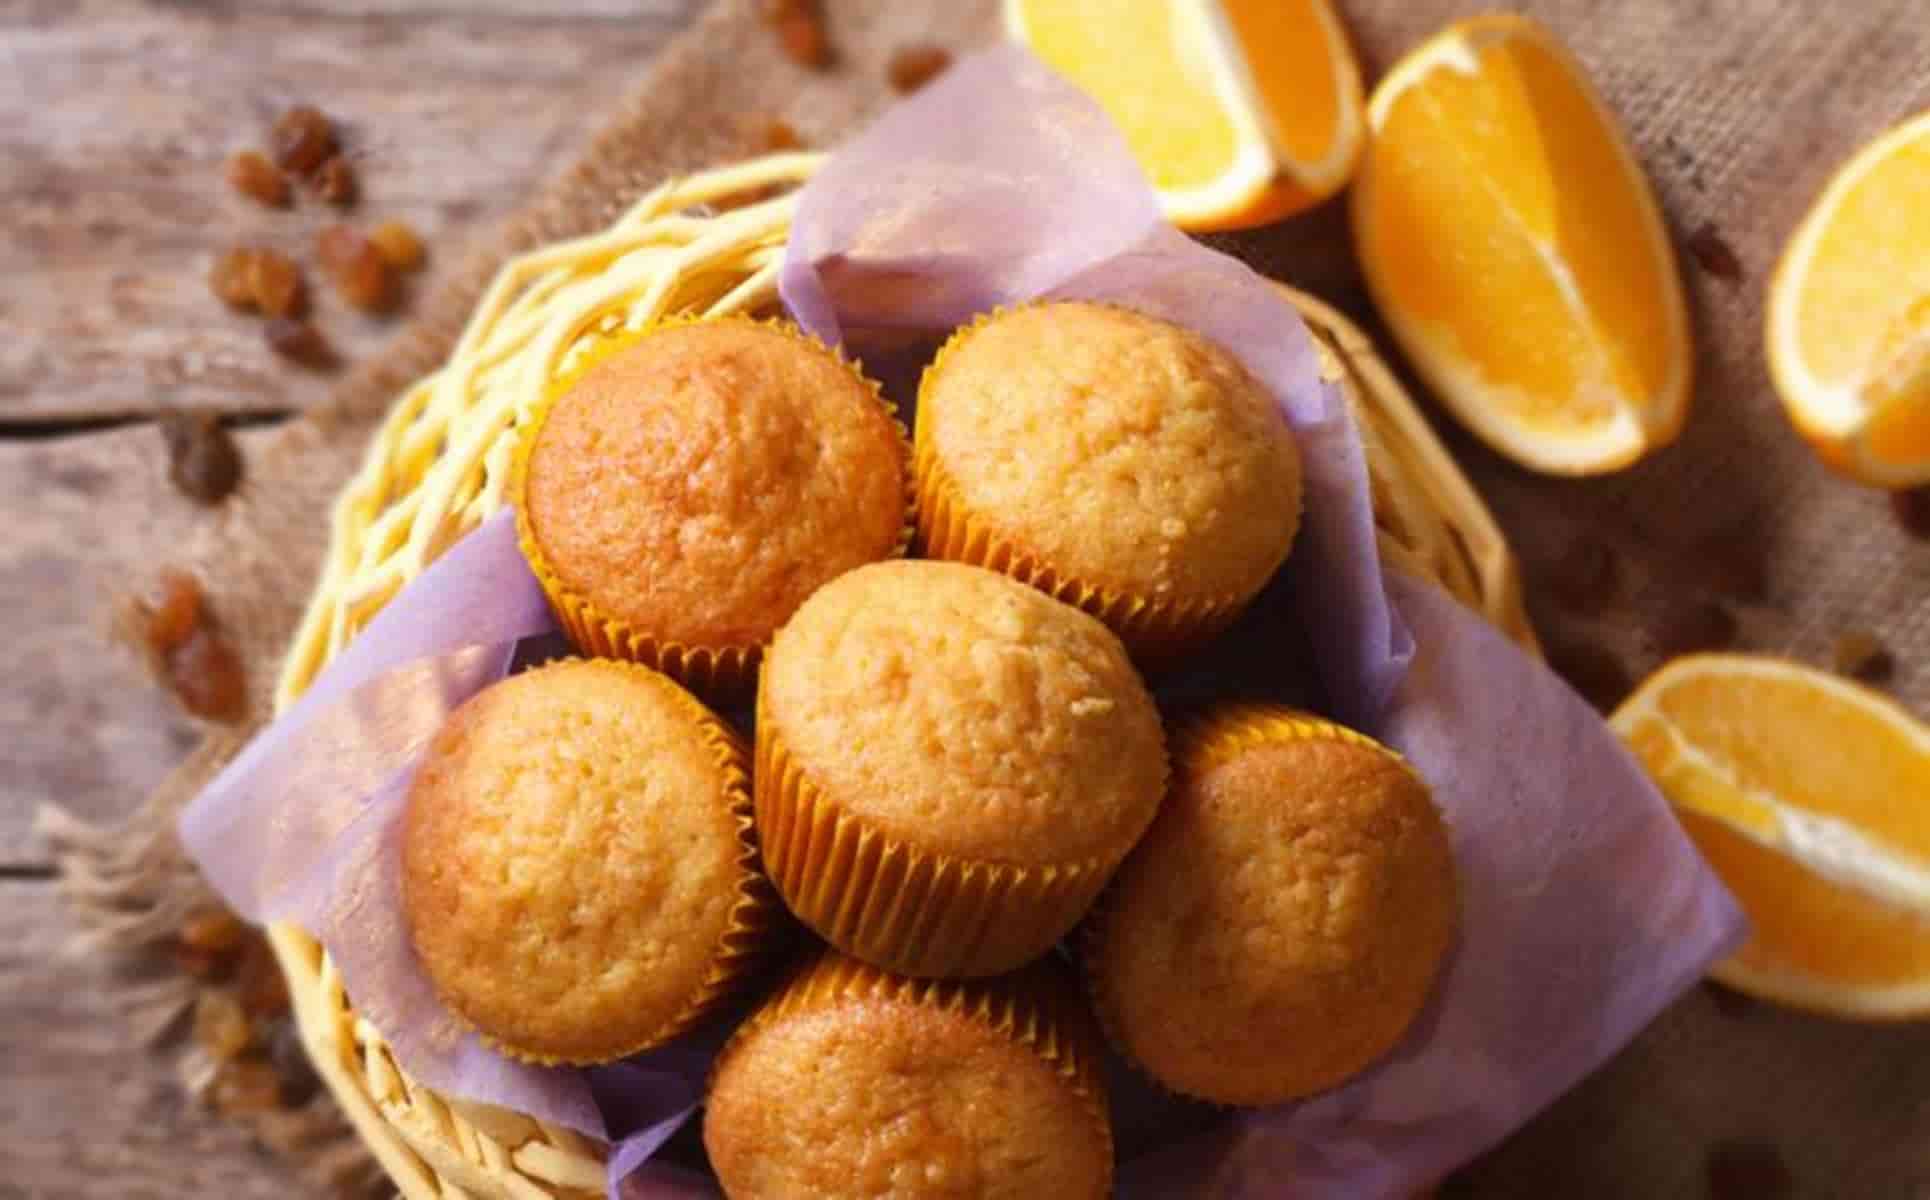 Prepare alguns deliciosos cupcakes sem usar ovos